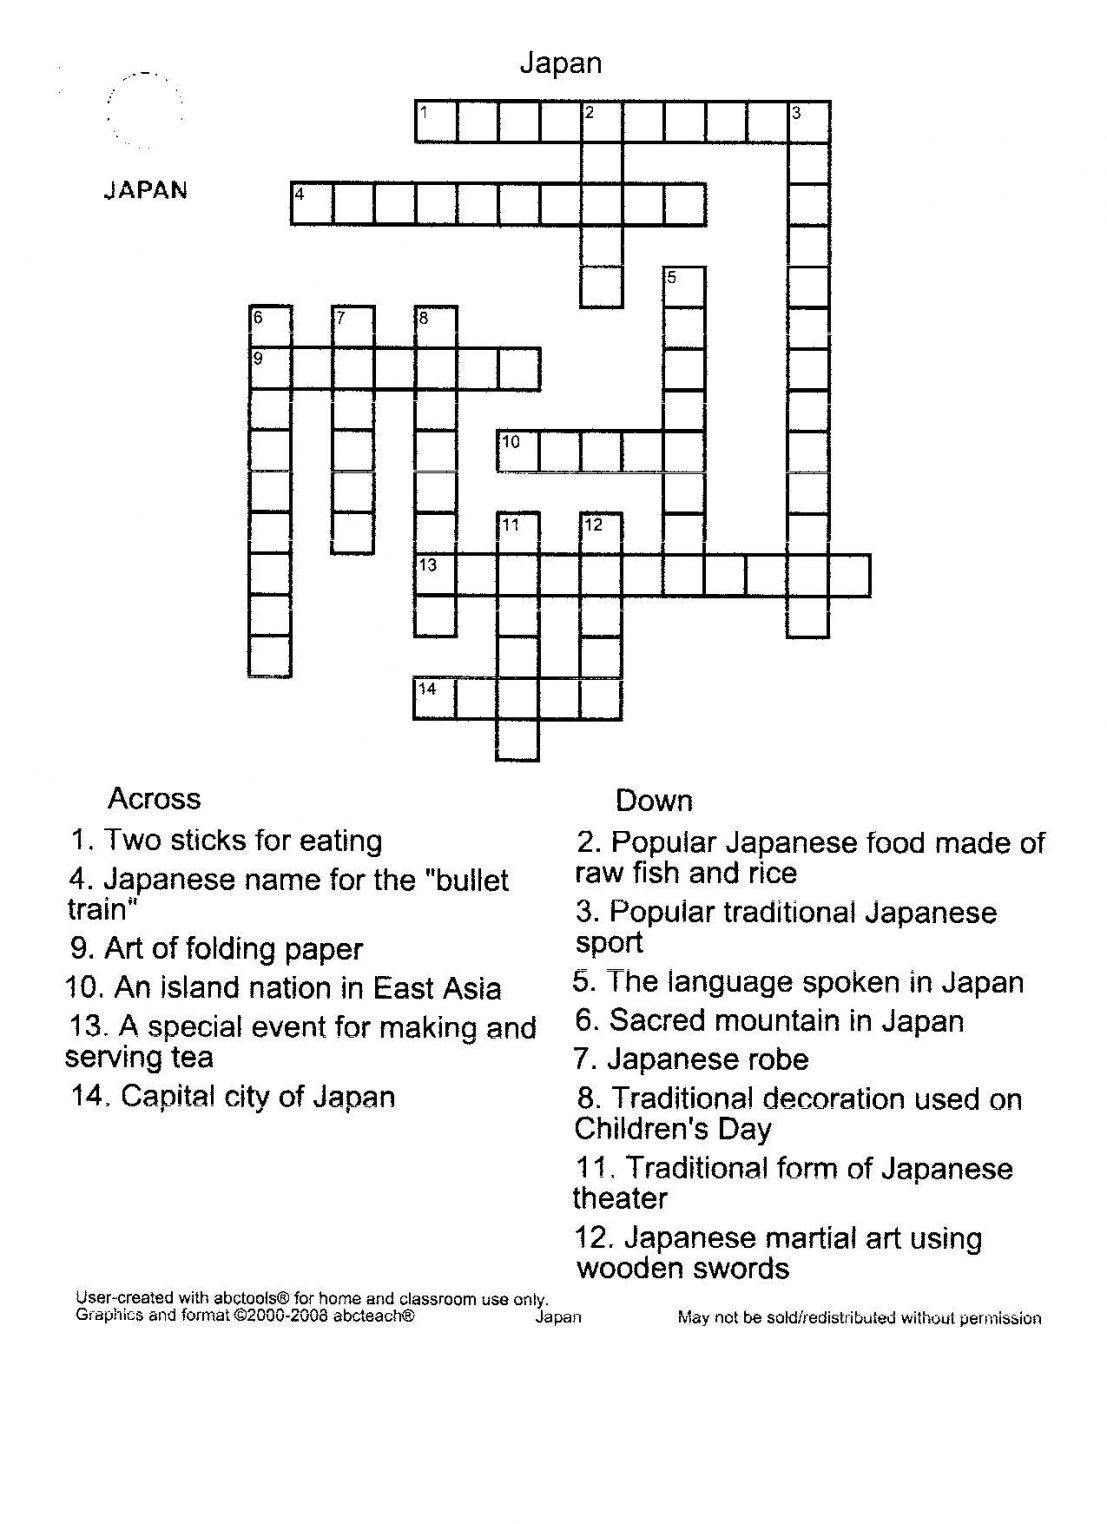 Free Crossword Puzzle Maker Printable - Hashtag Bg - Free Crossword - Printable Crossword Generator